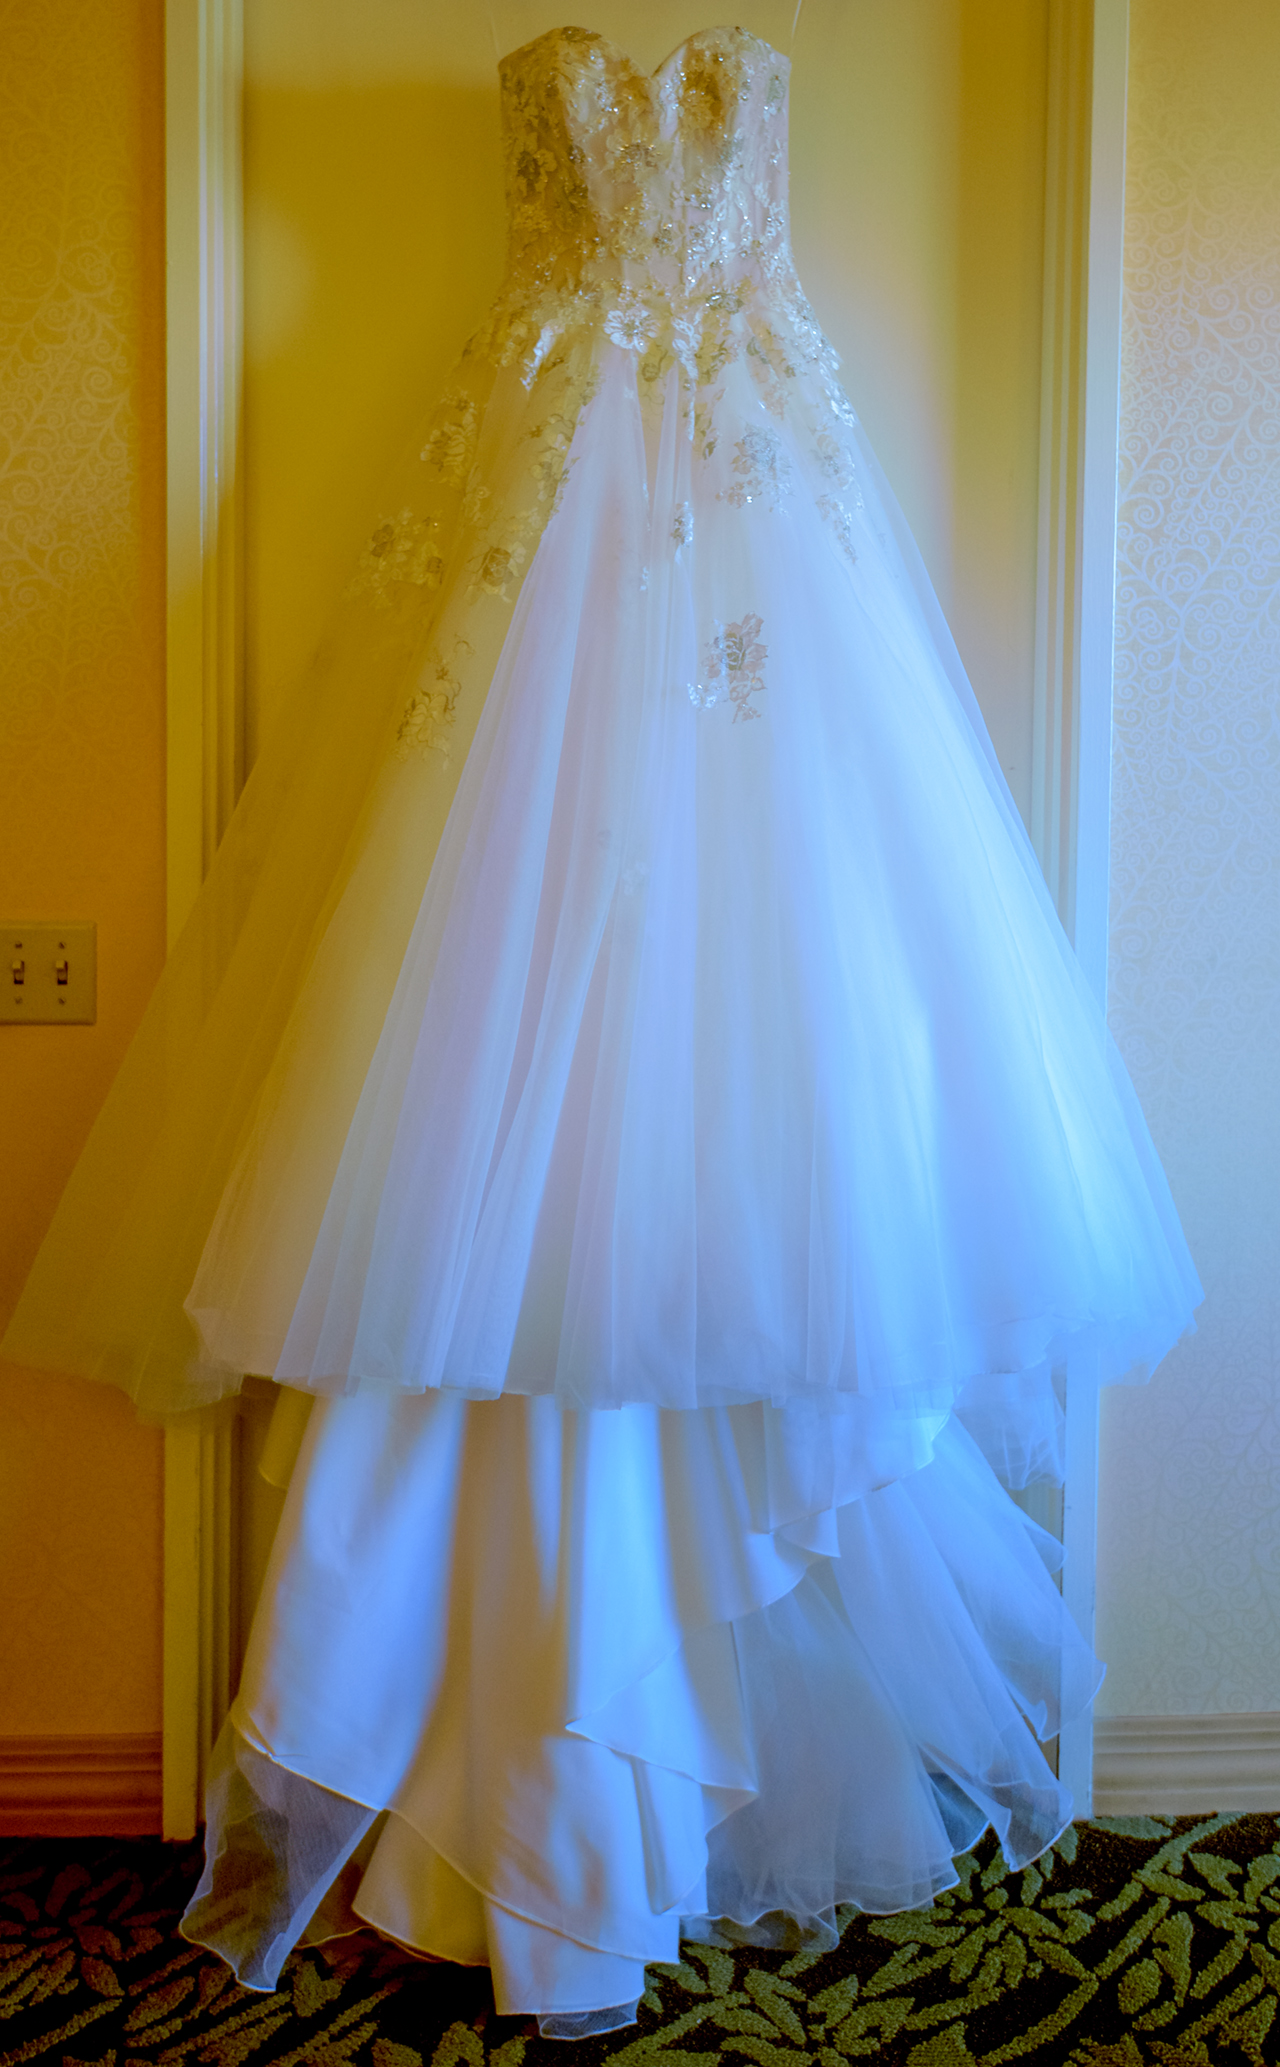 Brides wedding dress at Hilton Hawaiian Village